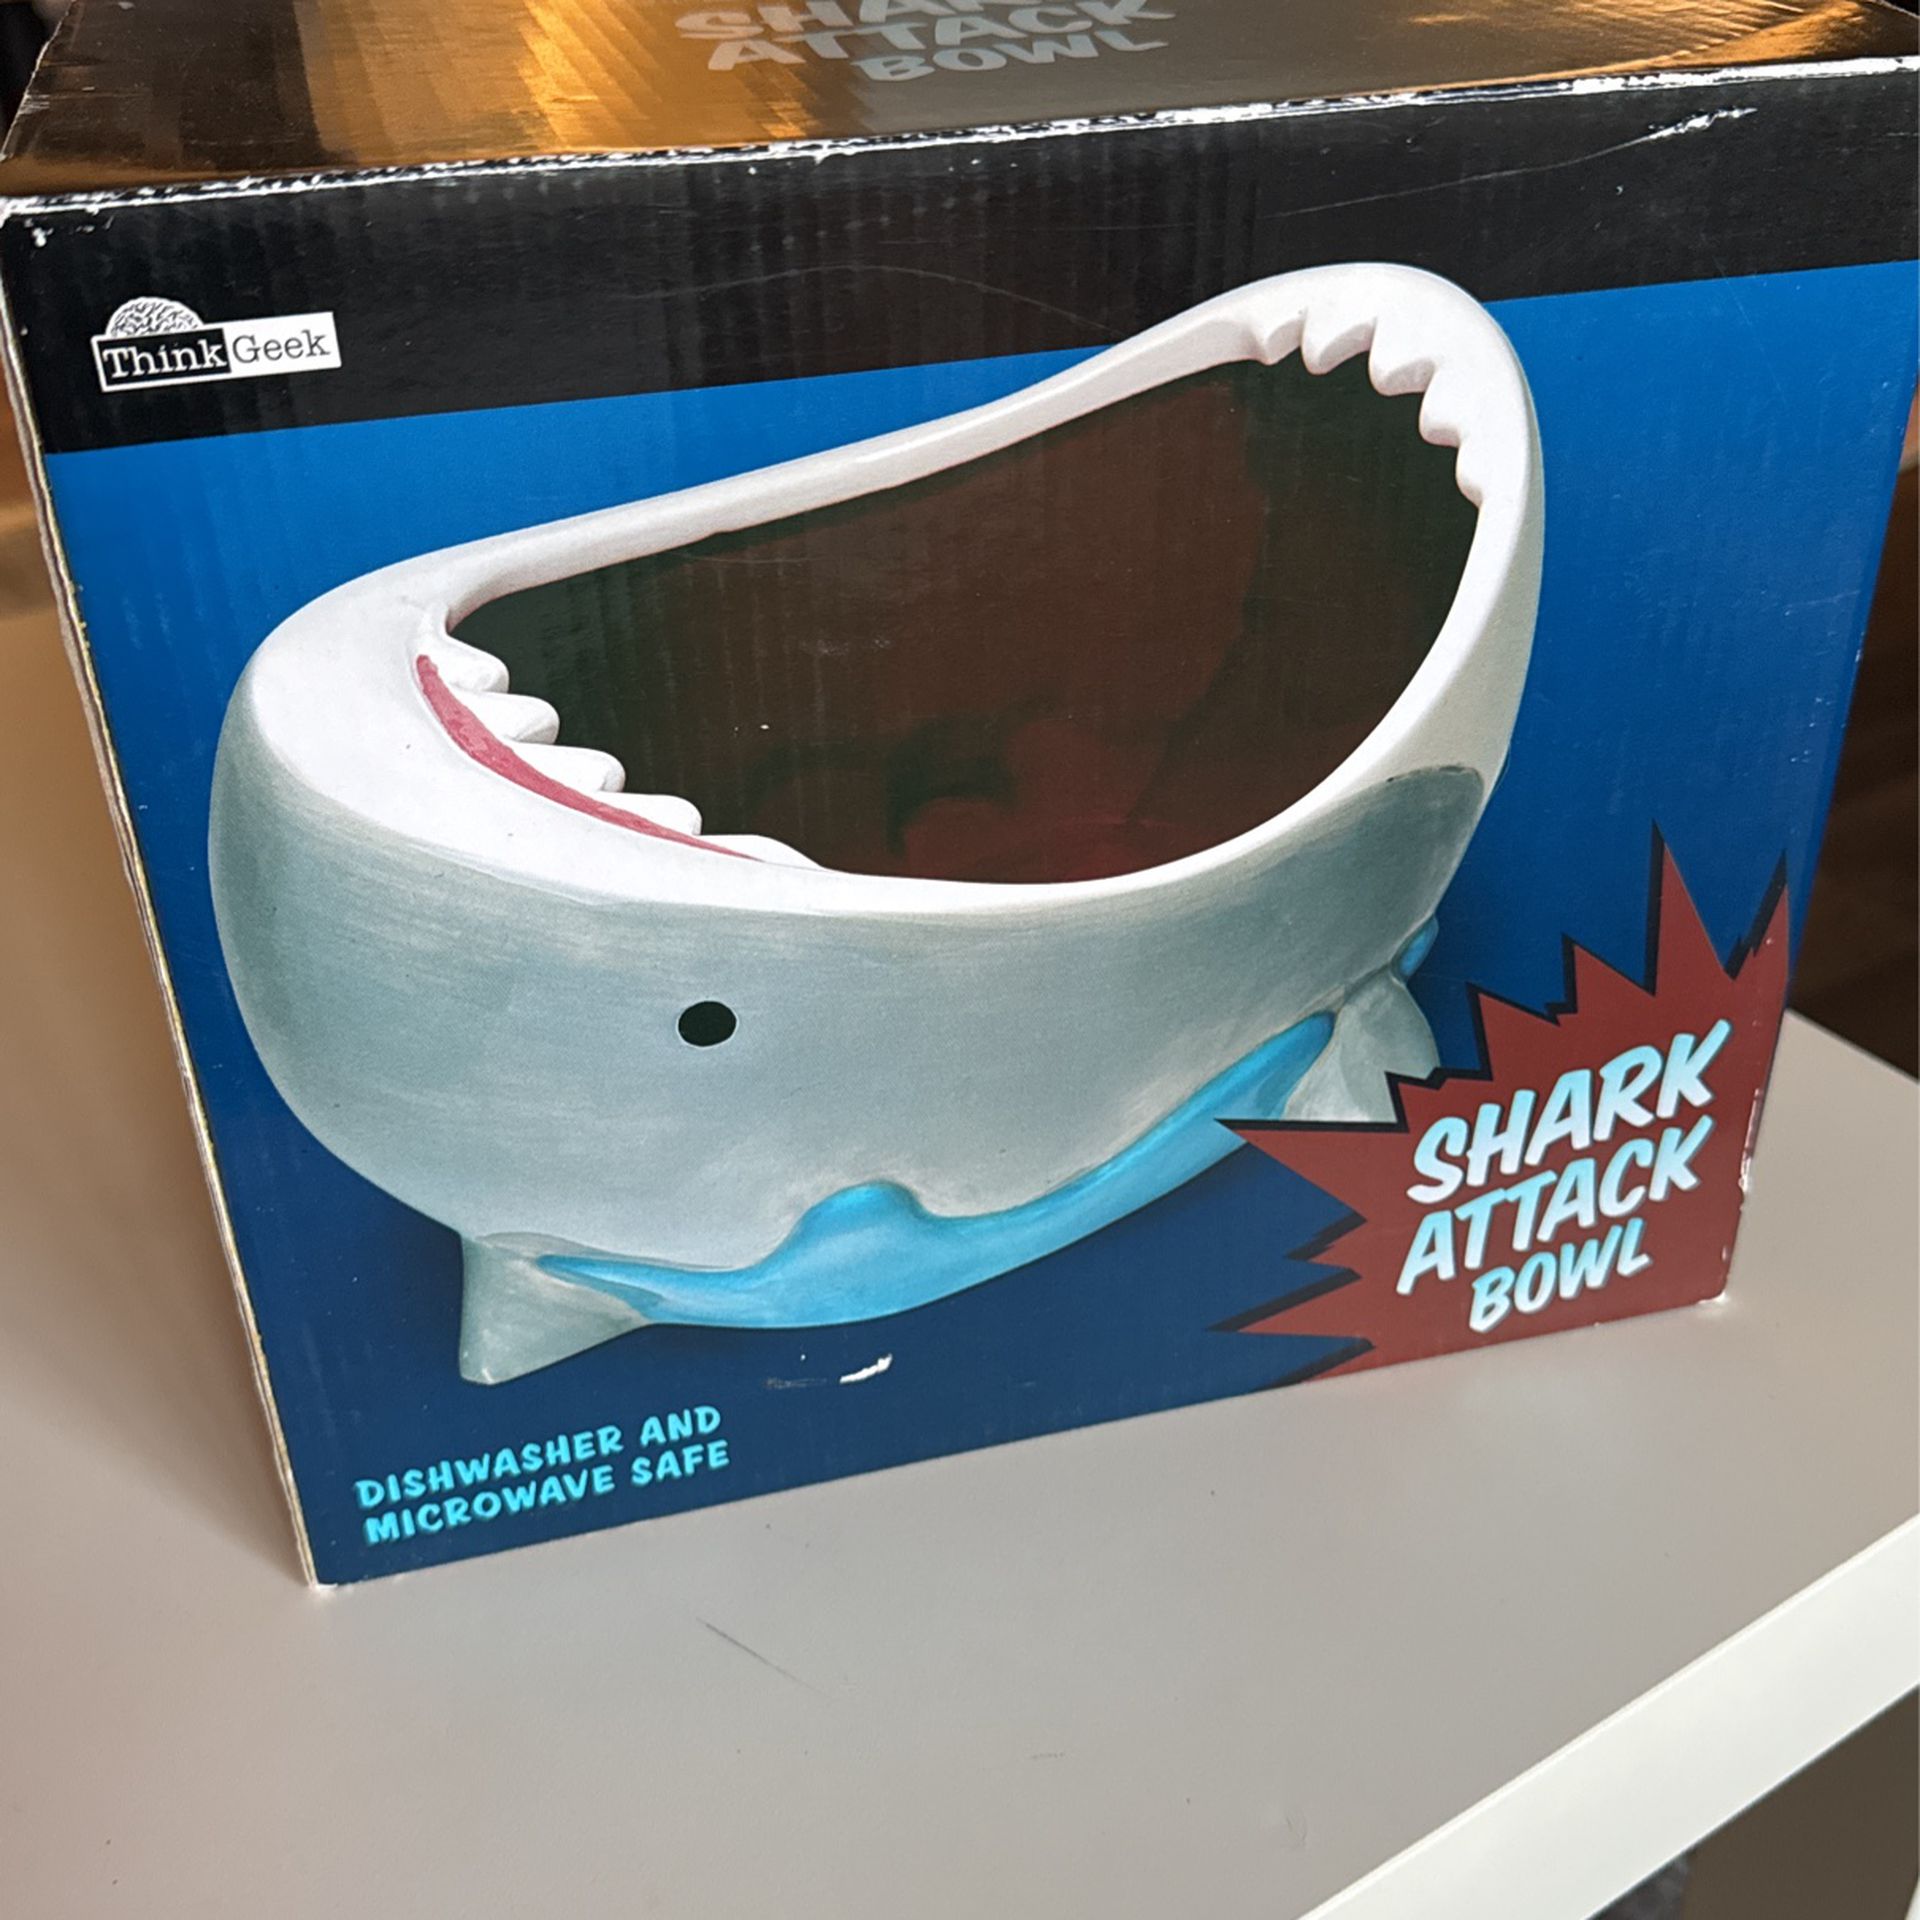 Shark Bowl